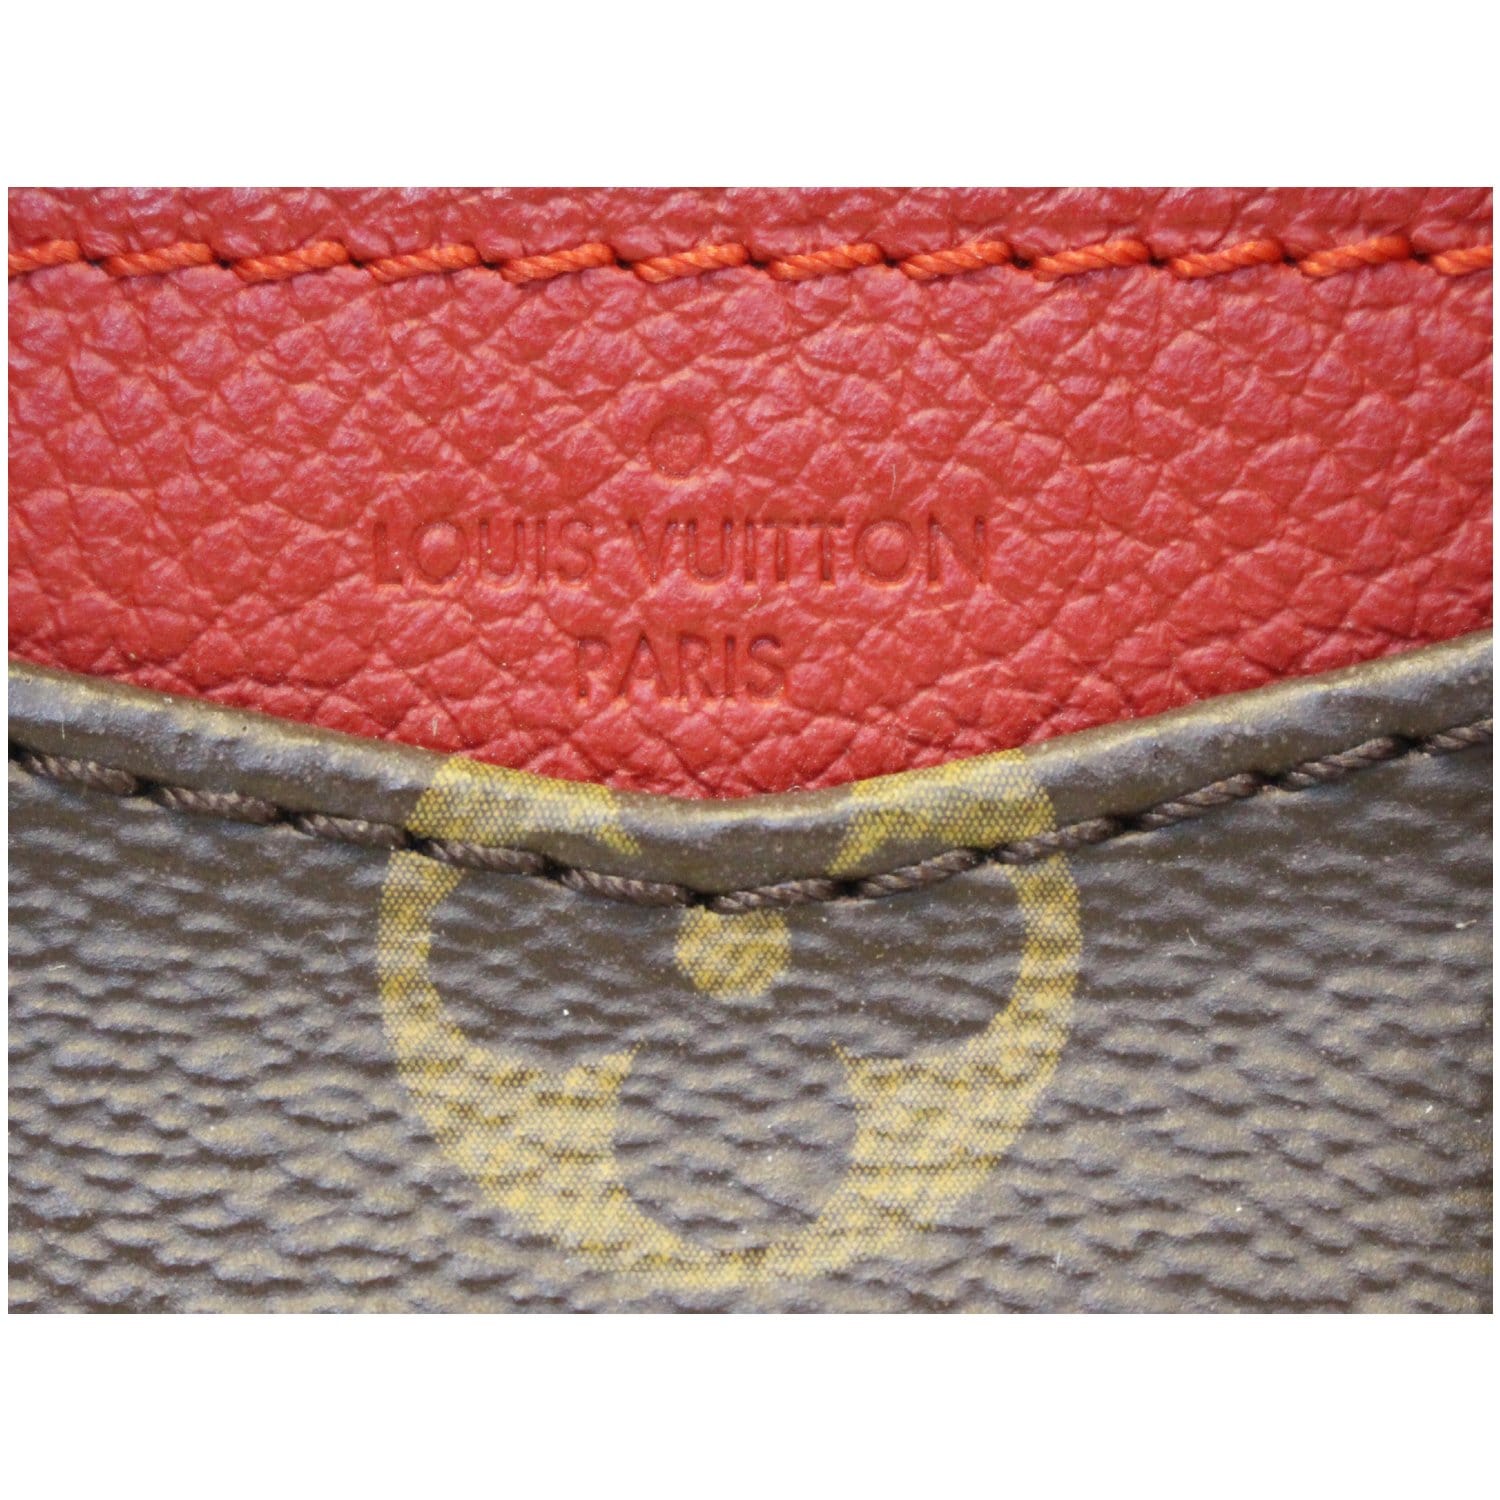 Louis Vuitton Monogram Canvas Nano Pallas Bag Louis Vuitton